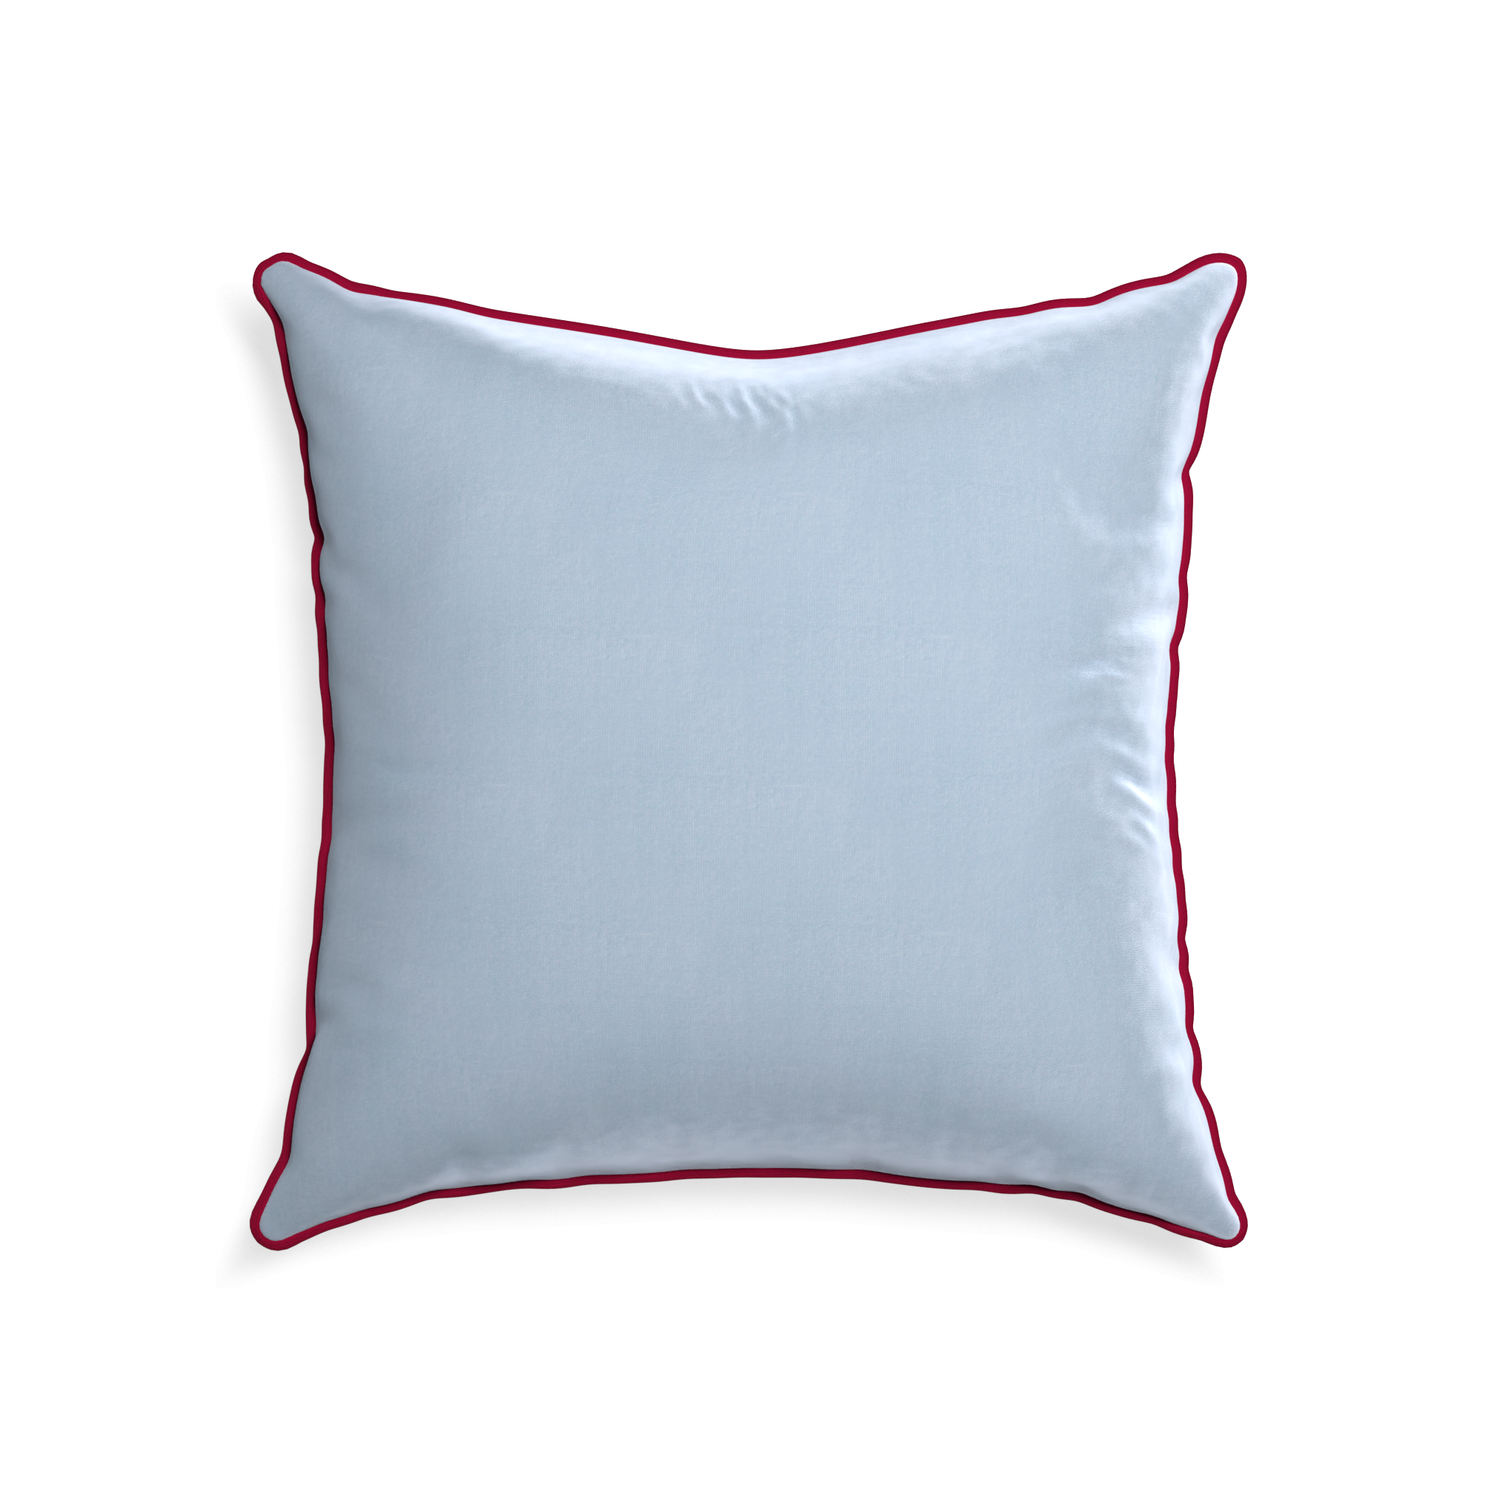 square light blue velvet pillow with dark red piping